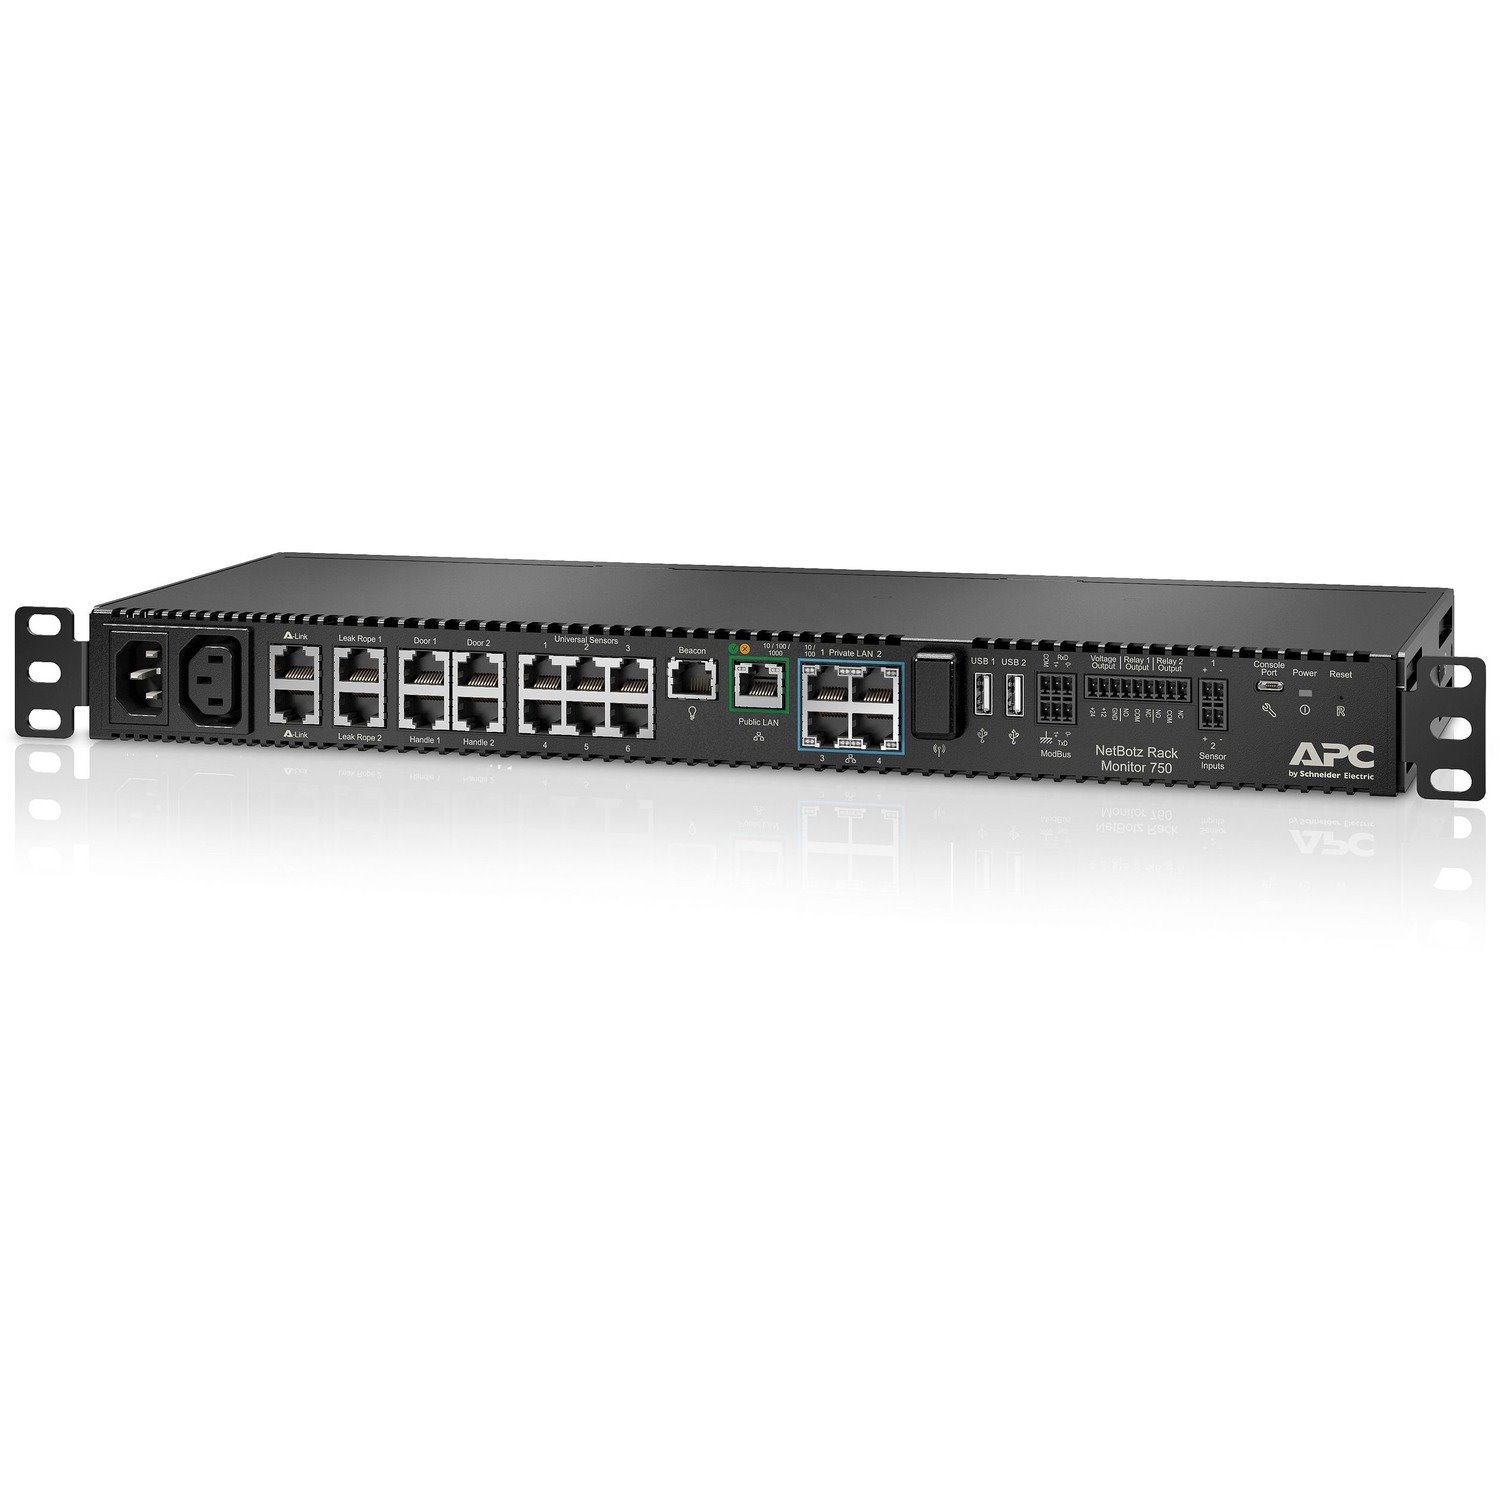 APC by Schneider Electric NetBotz Rack Monitor 750